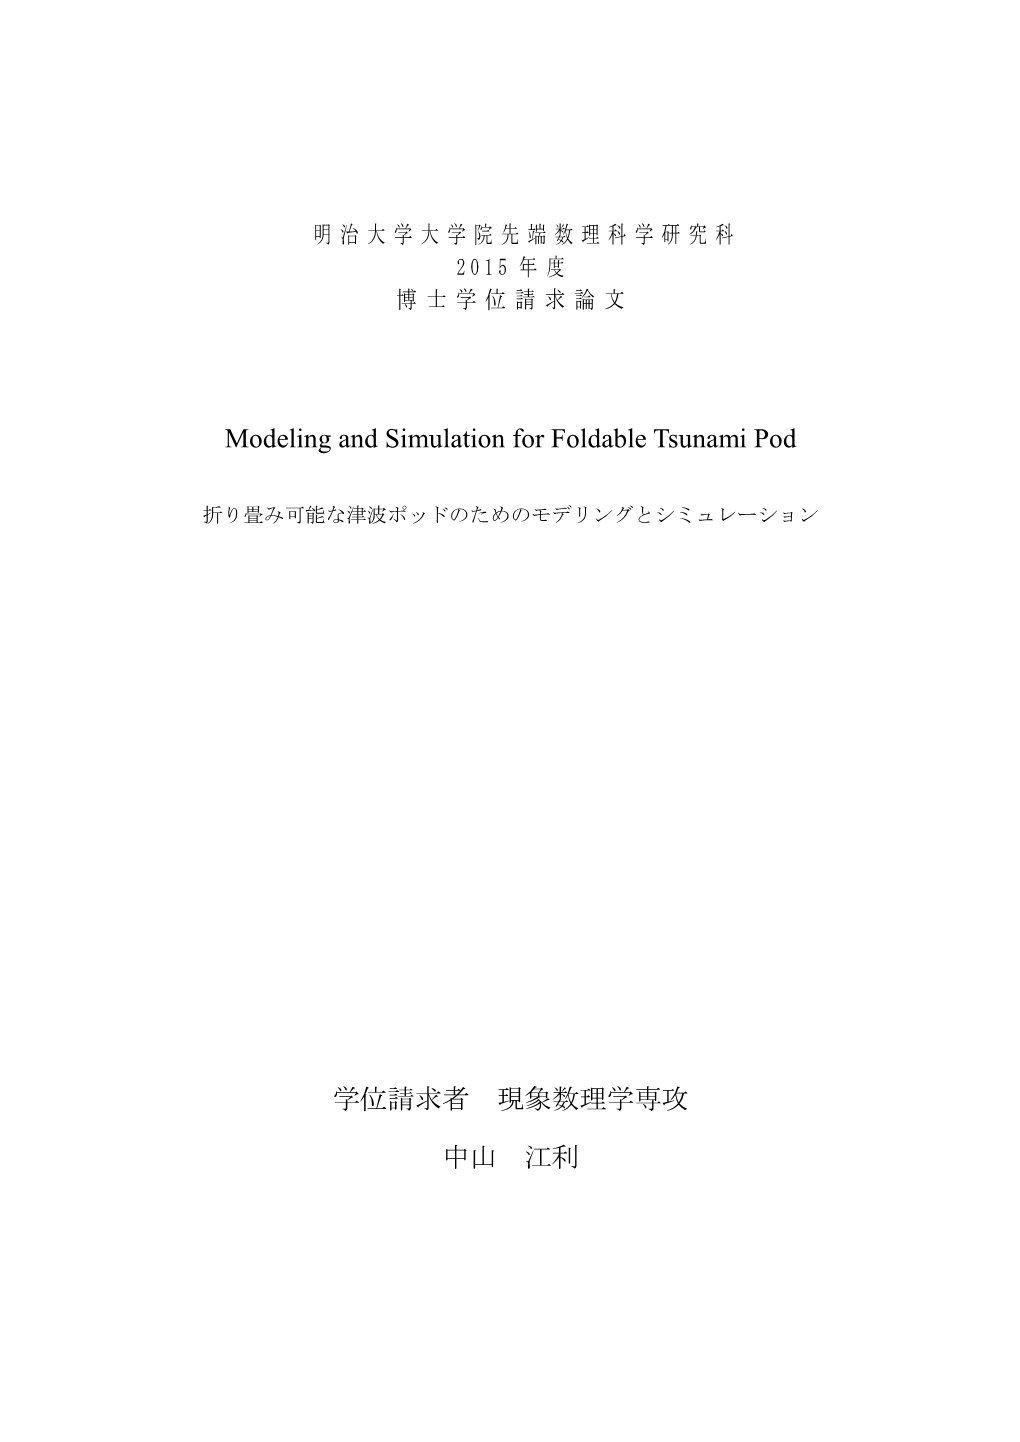 Modeling and Simulation for Foldable Tsunami Pod